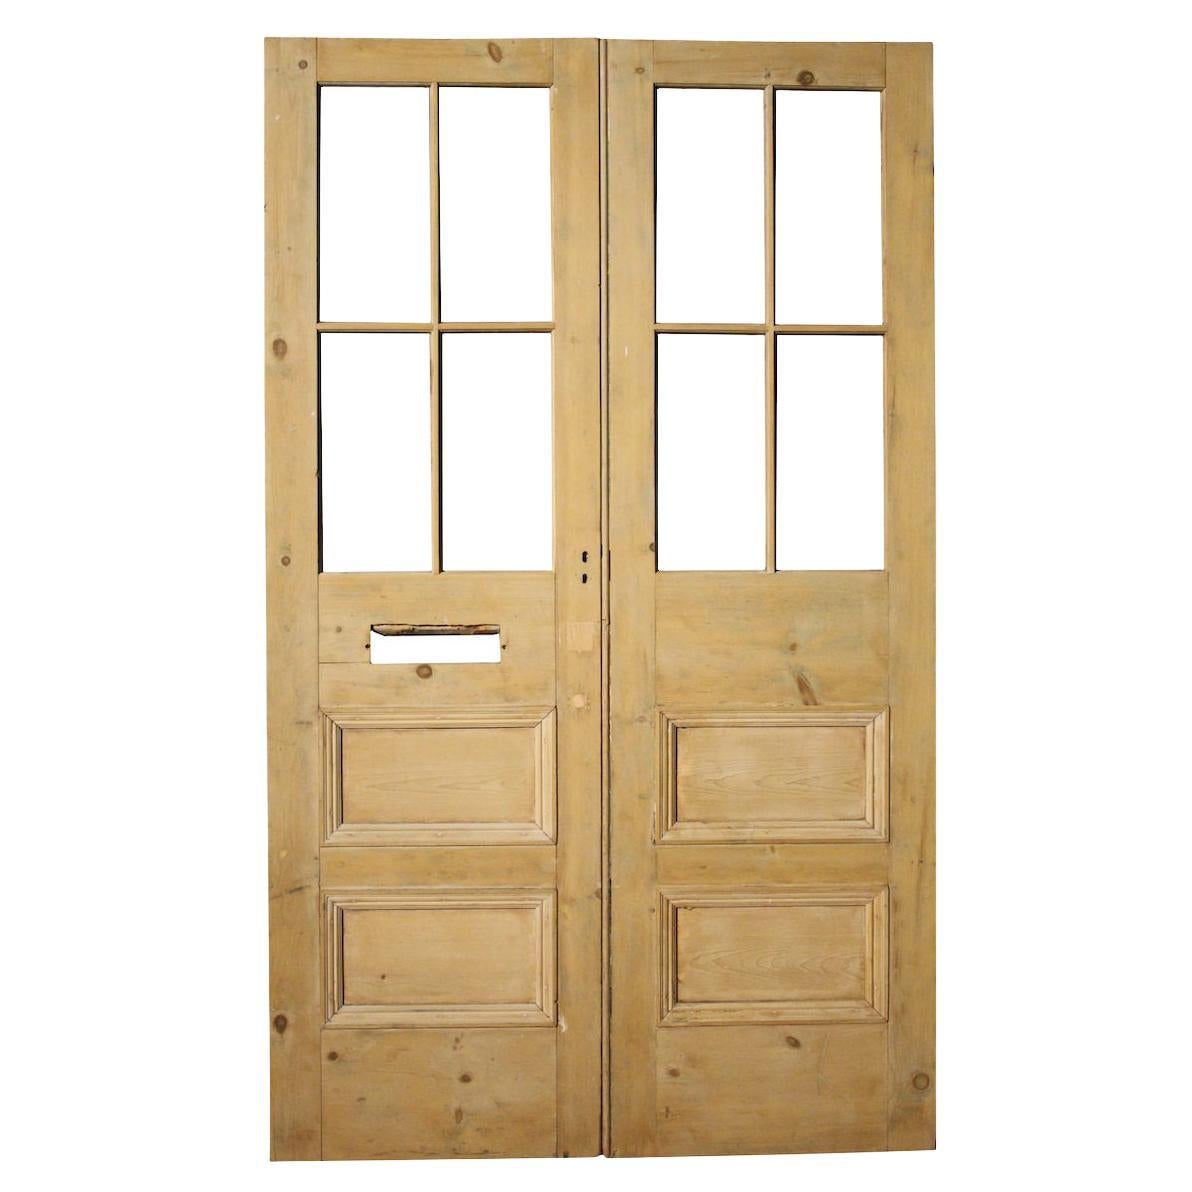 Set of Antique External Double Doors For Sale